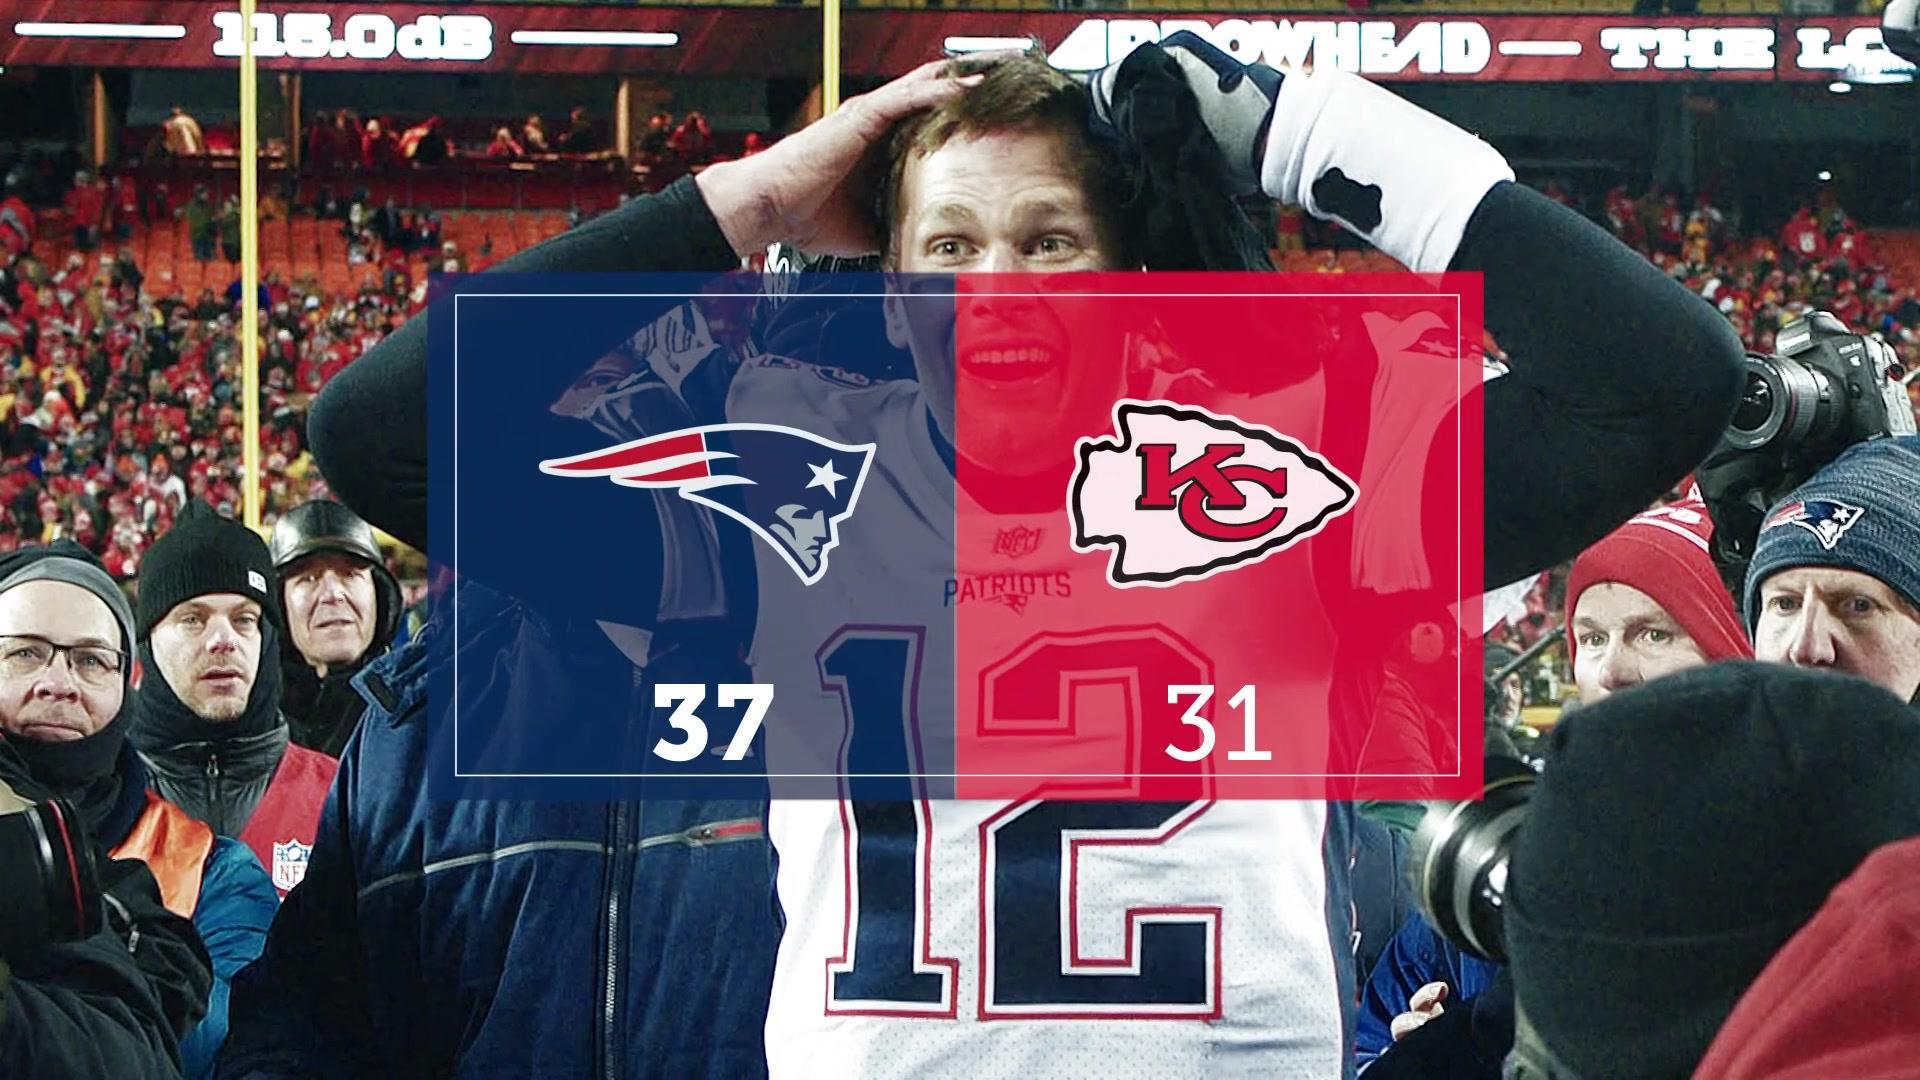 Patriots defeat Chiefs to advance to Super Bowl LIII. NBC Sports Boston